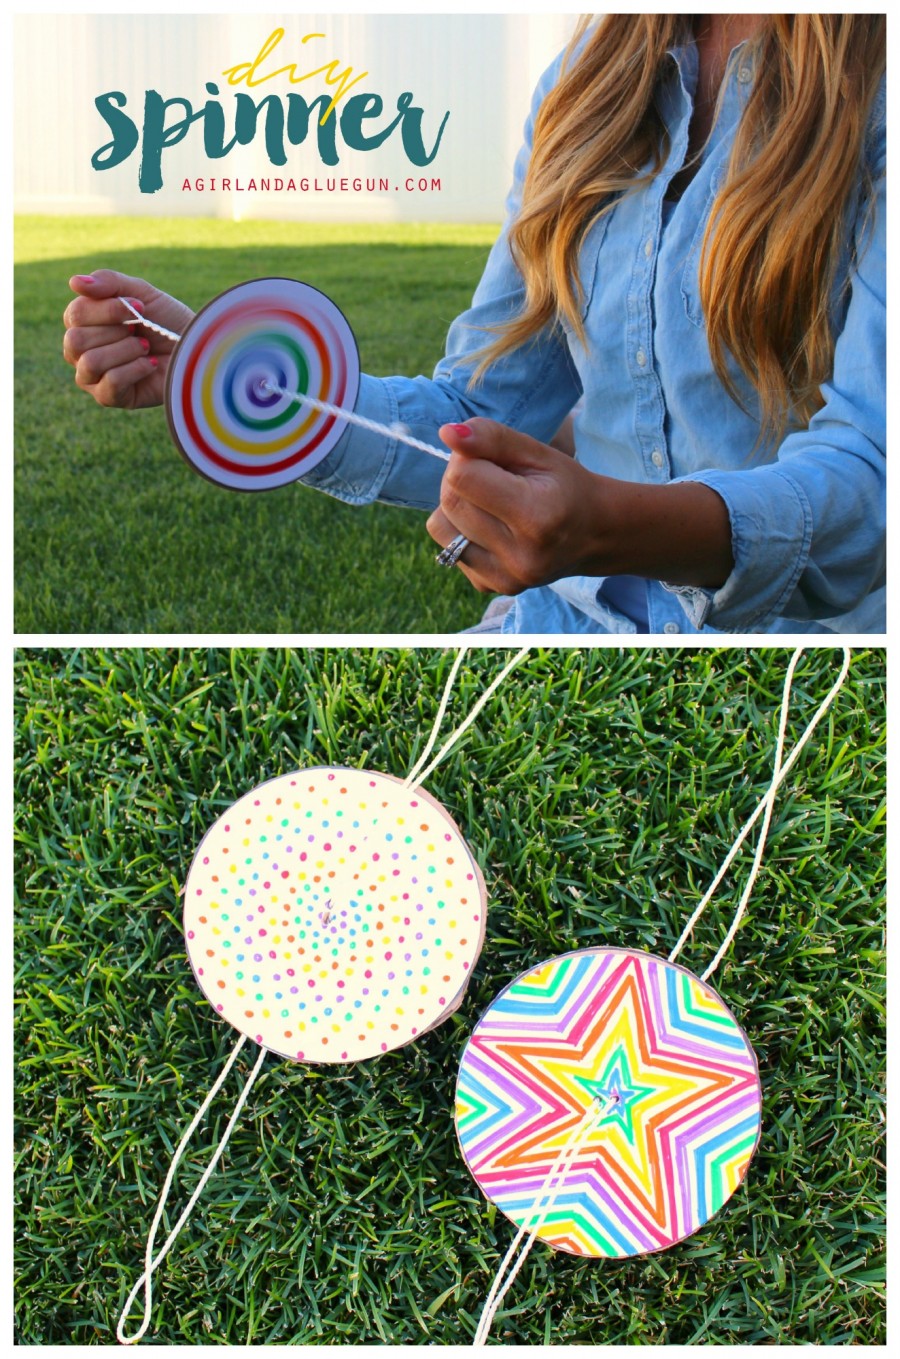 Resin Crafts Blog | DIY Decor | Summer Art Projects | DIY Art Projects | Summer Crafts | Crafts for Kids | Crafts for Adults |